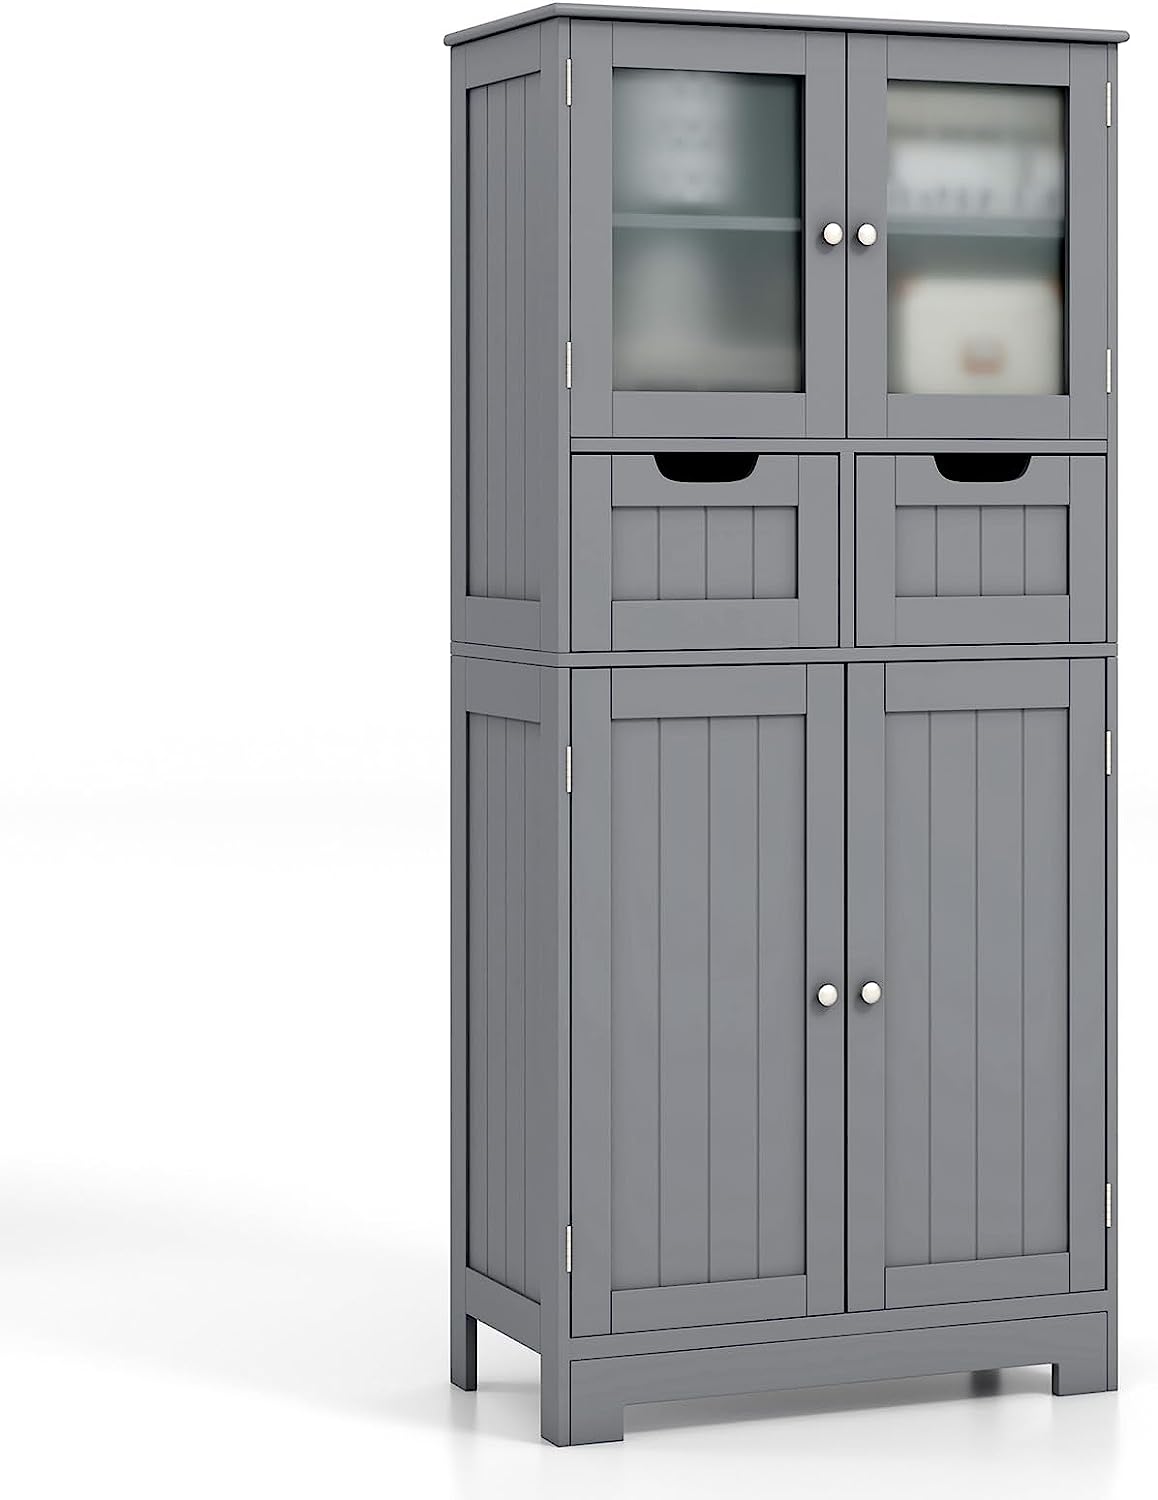 Giantex Large Bathroom Floor Cabinet, Freestanding Multipurpose Storage Cabinet with Drawer, 2 Open Shelves and Door Cupboard for Bathroom, Living